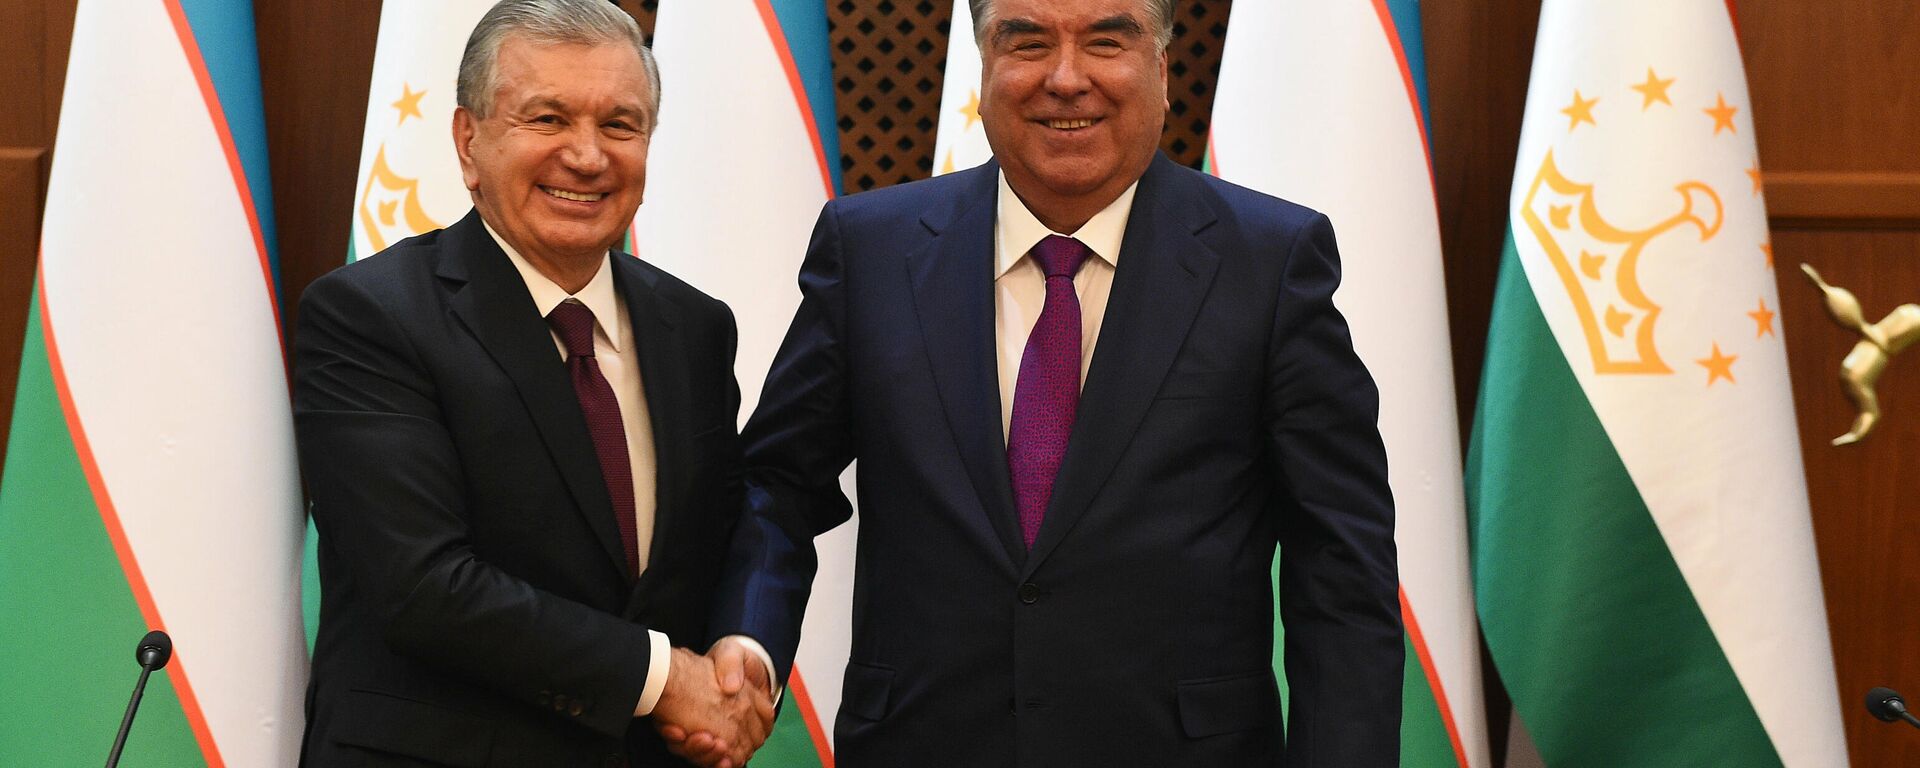 Президент Узбекистана Шавкат Мирзиеев и президент Таджикистана Эмомали Рахмон - Sputnik Таджикистан, 1920, 25.10.2021